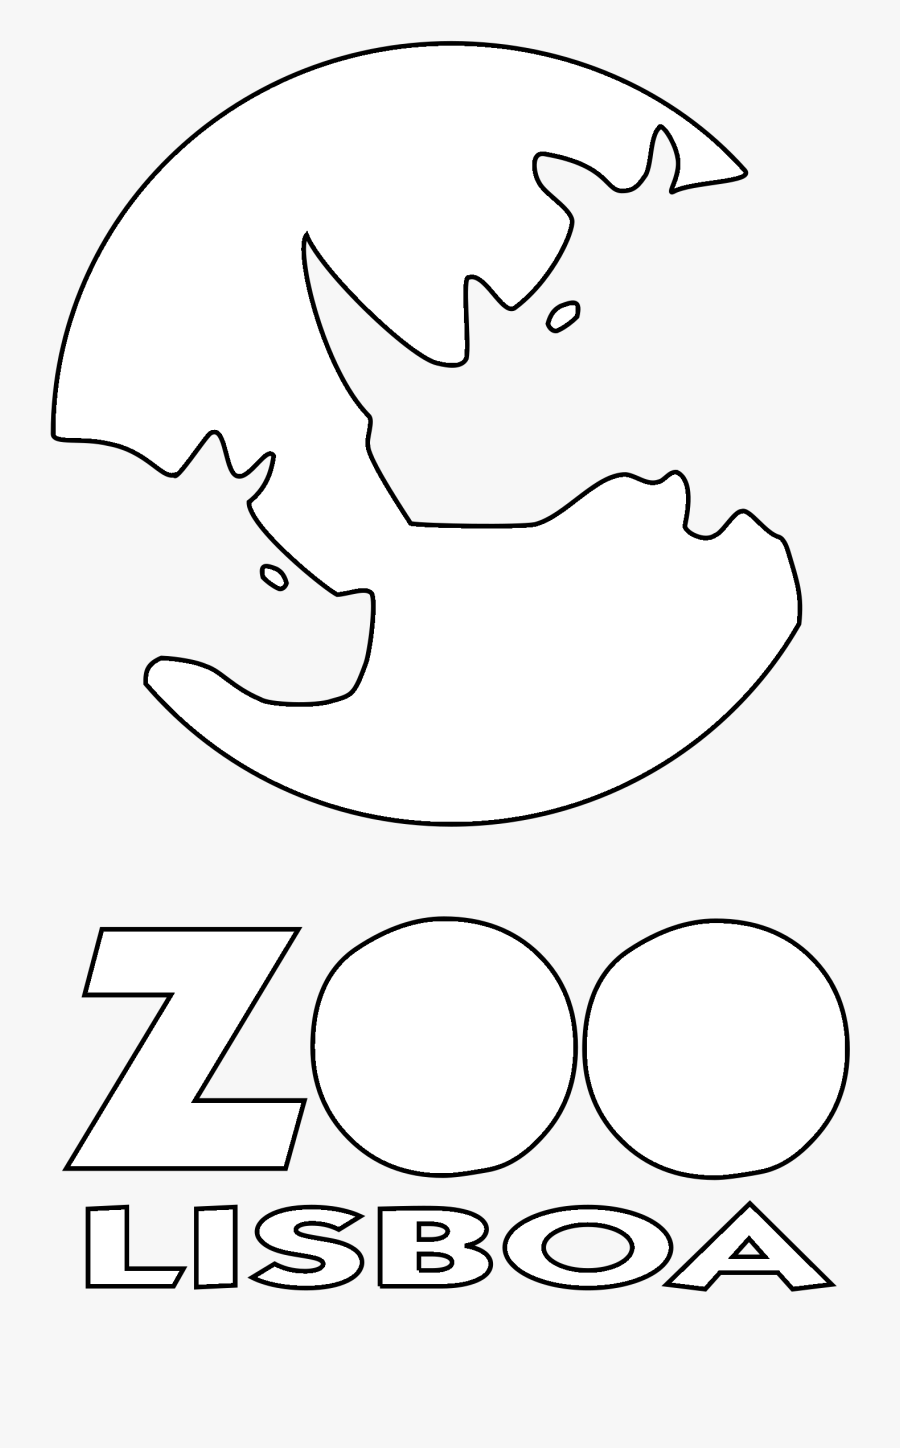 Zoo De Lisboa Logo Black And White - Line Art, Transparent Clipart